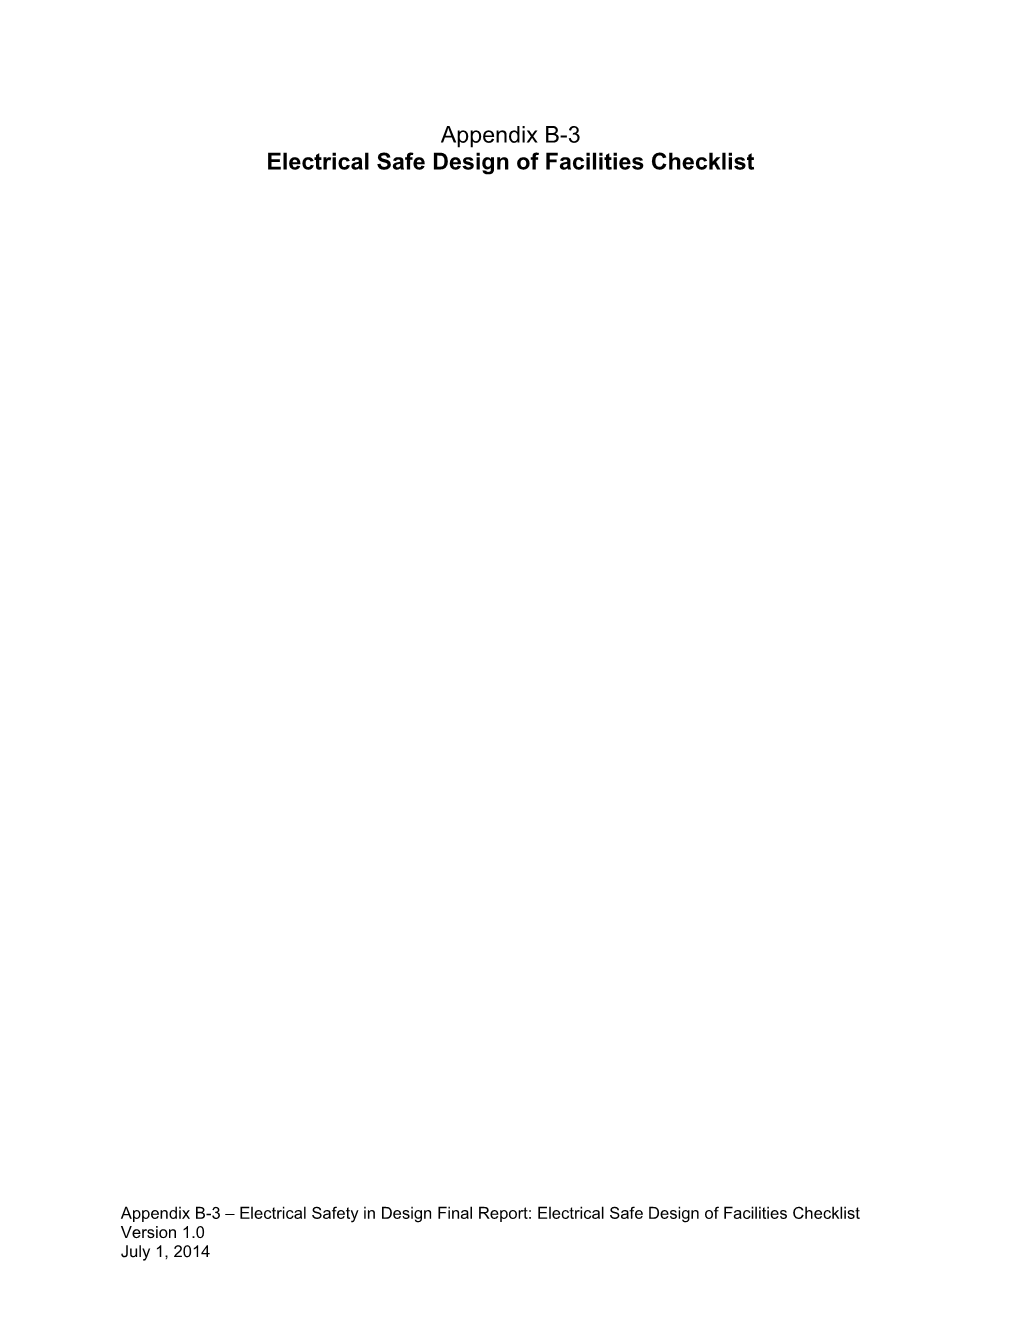 Electrical Safe Design of Facilities Checklist